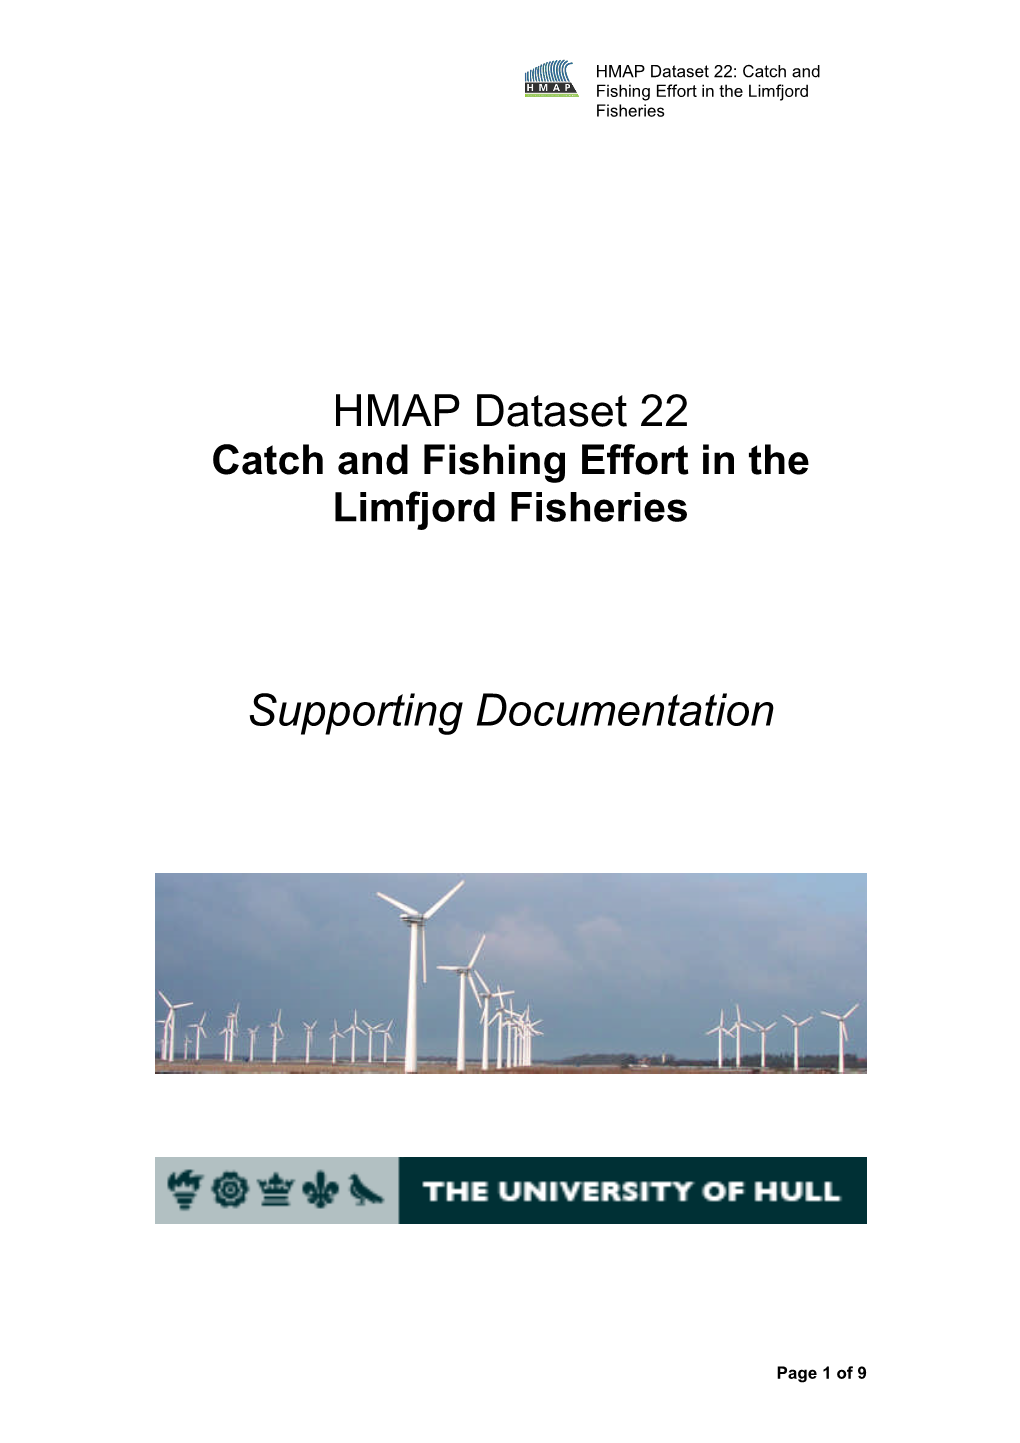 HMAP Dataset 22 Supporting Documentation